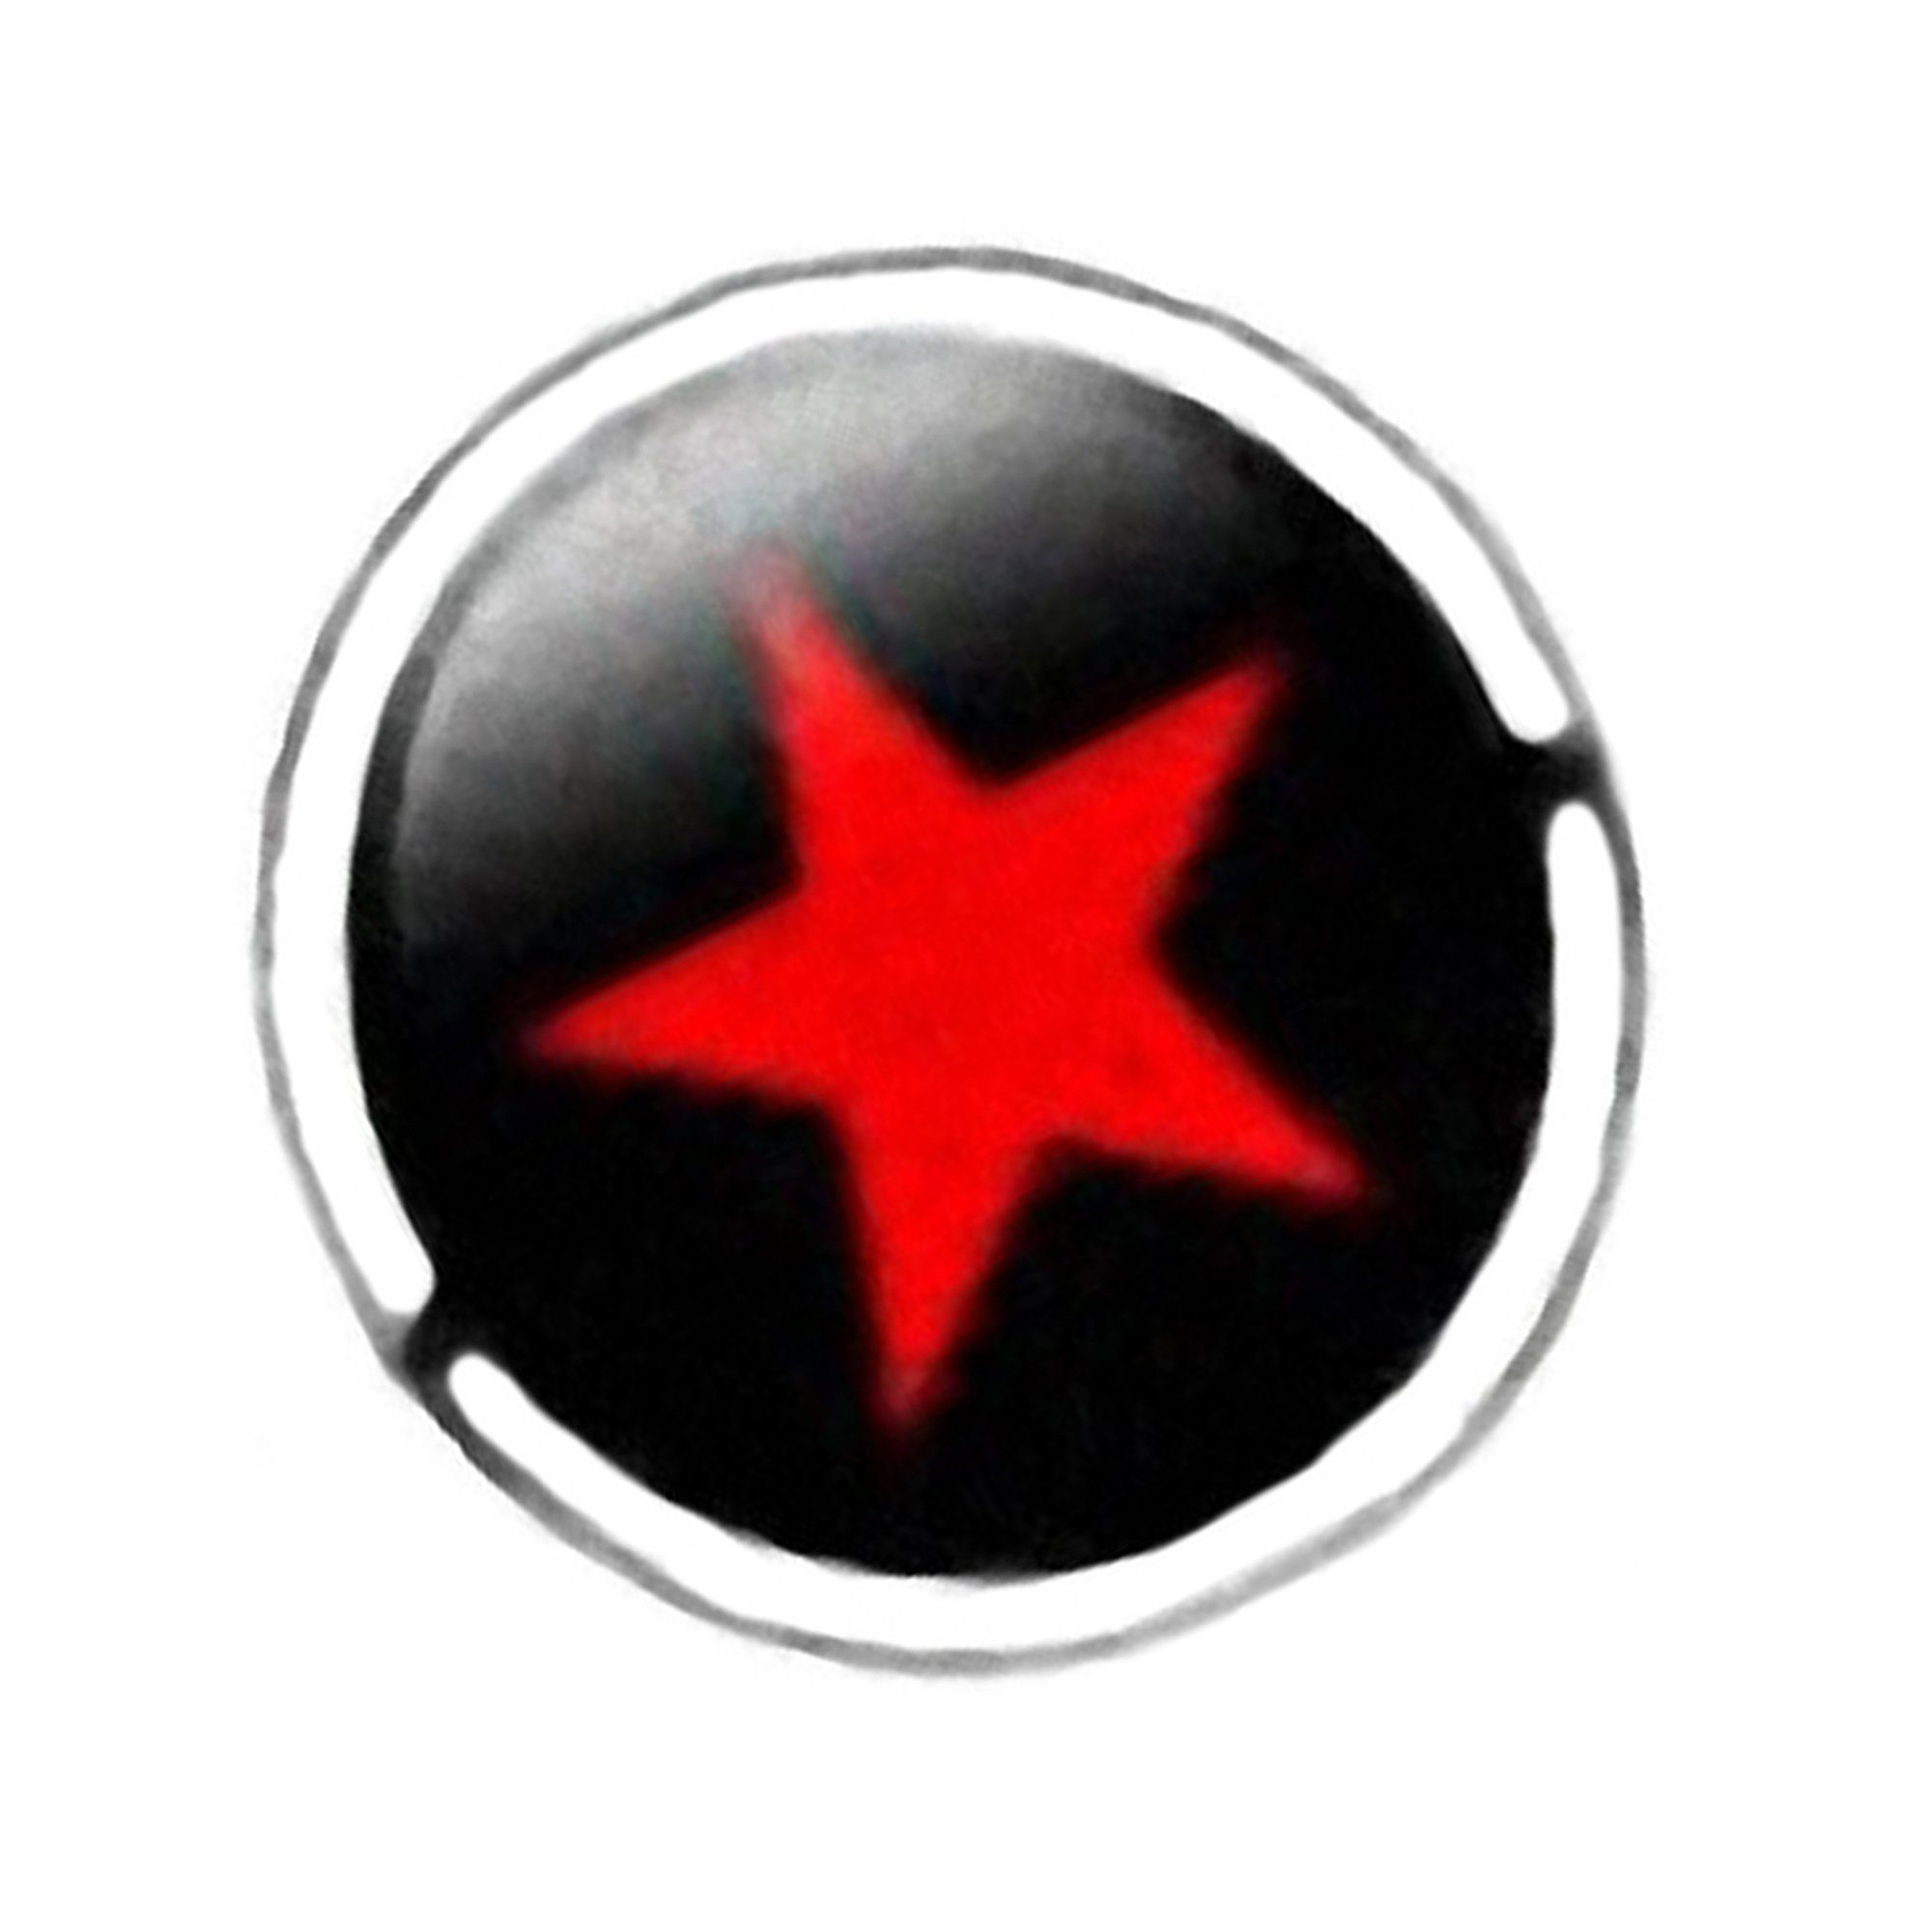 Taffstyle Piercing-Implantat Dermal Piercing Aufsatz Logo Aufsatz Kugel Comic Aufsatzkugel Stecker Kugel Star, Red Anker Anchor Diver Flach Skin Ball